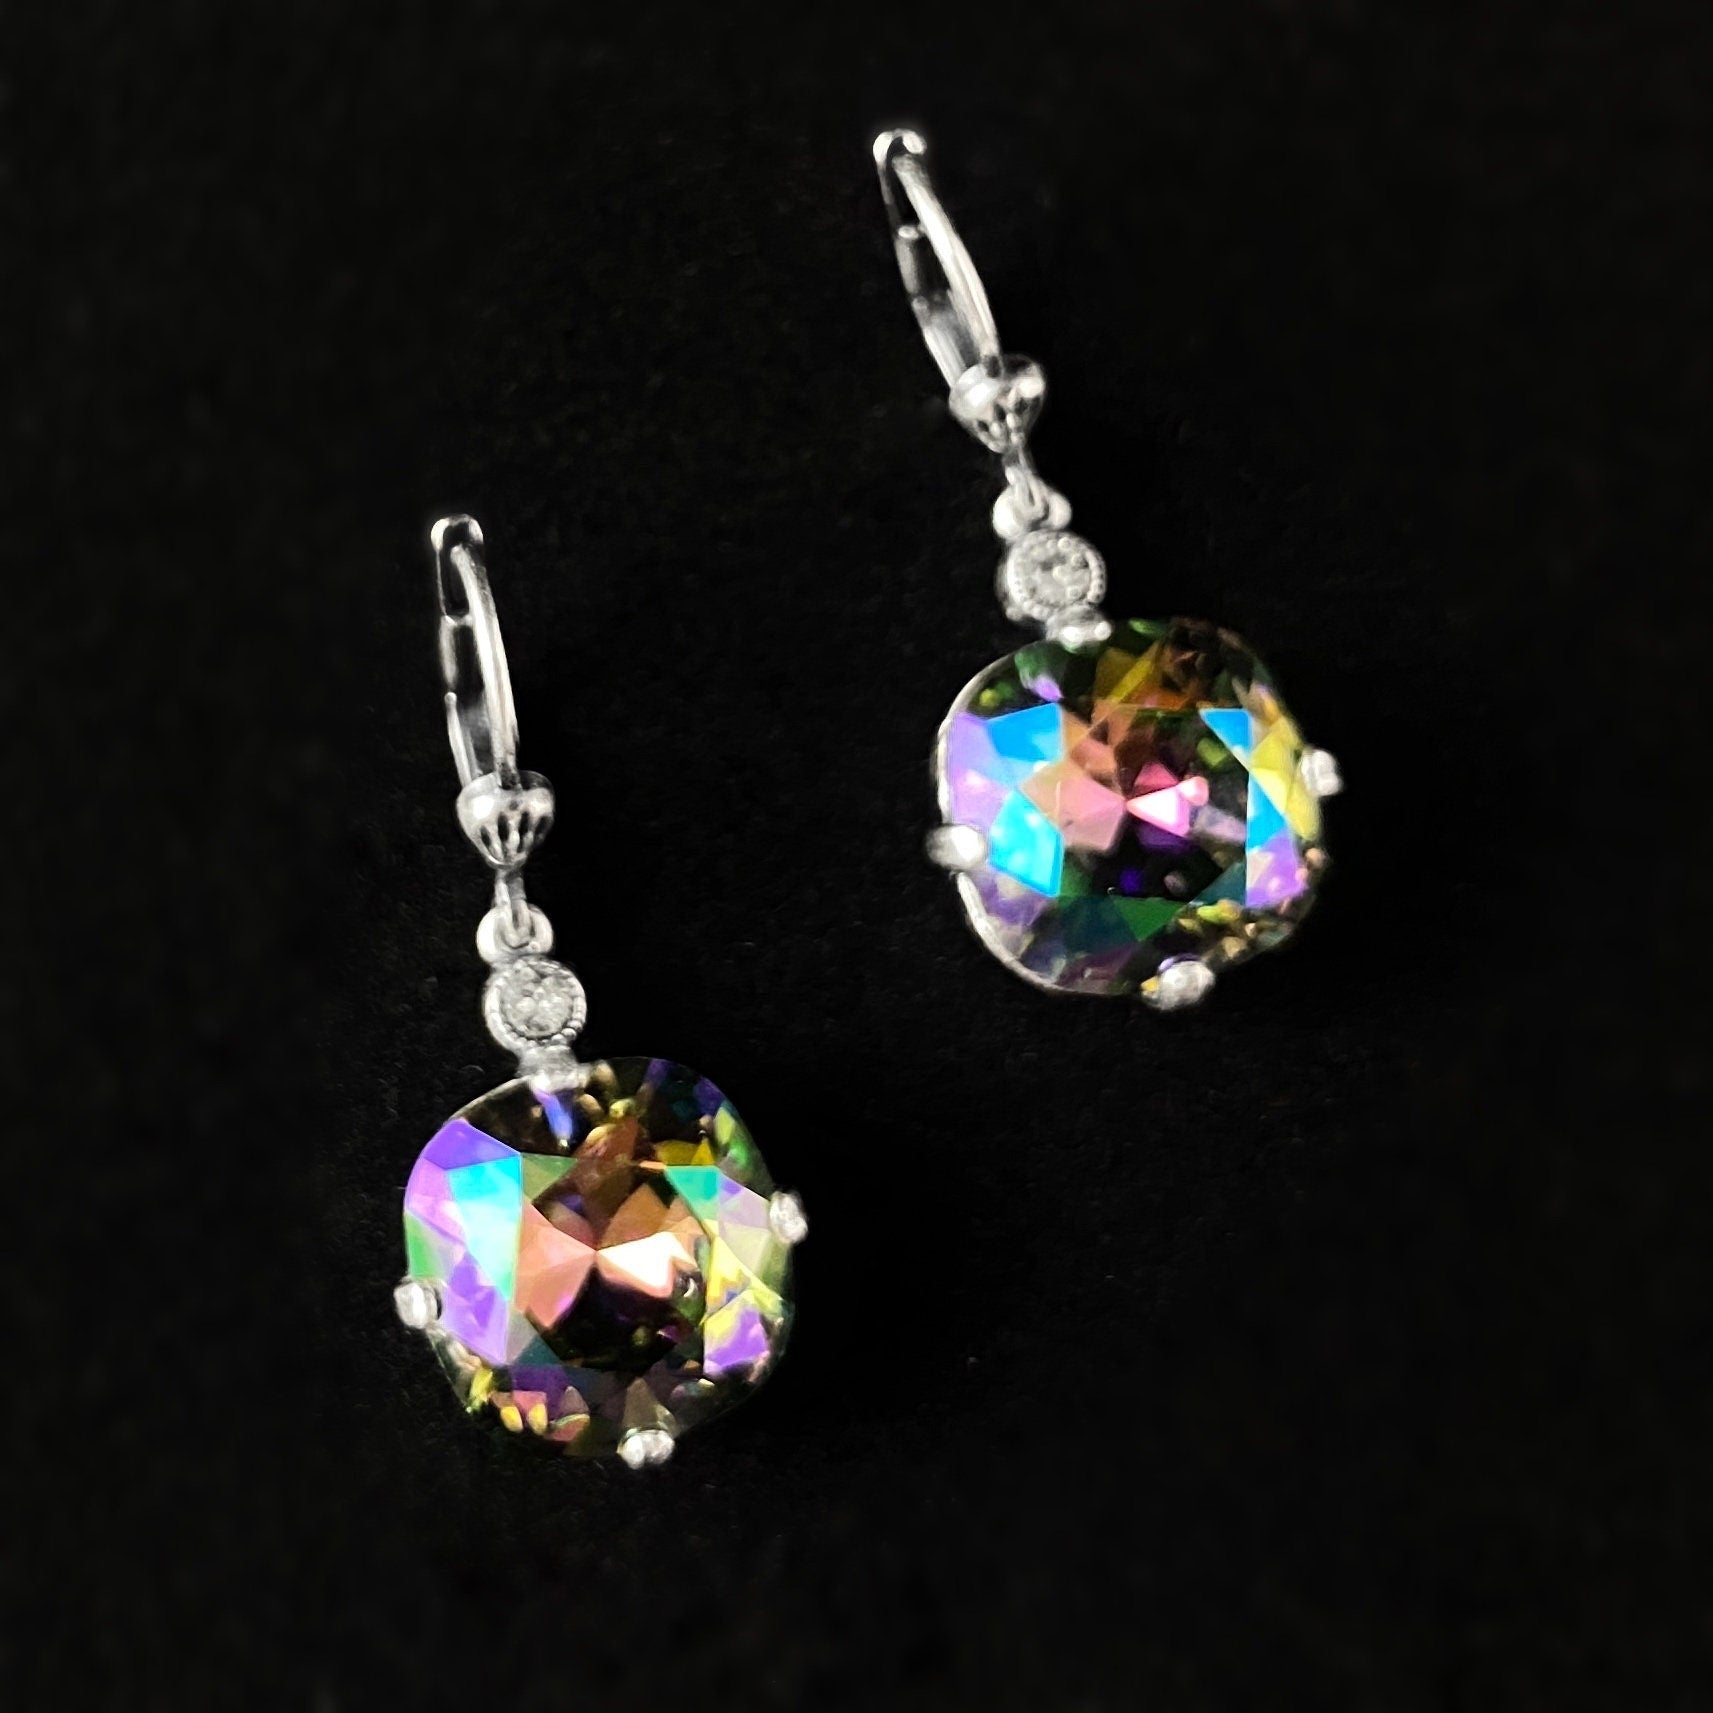 Dark Opal Rainbow Cushion Cut Swarovski Crystal Drop Earrings- La Vie Parisienne by Catherine Popesco